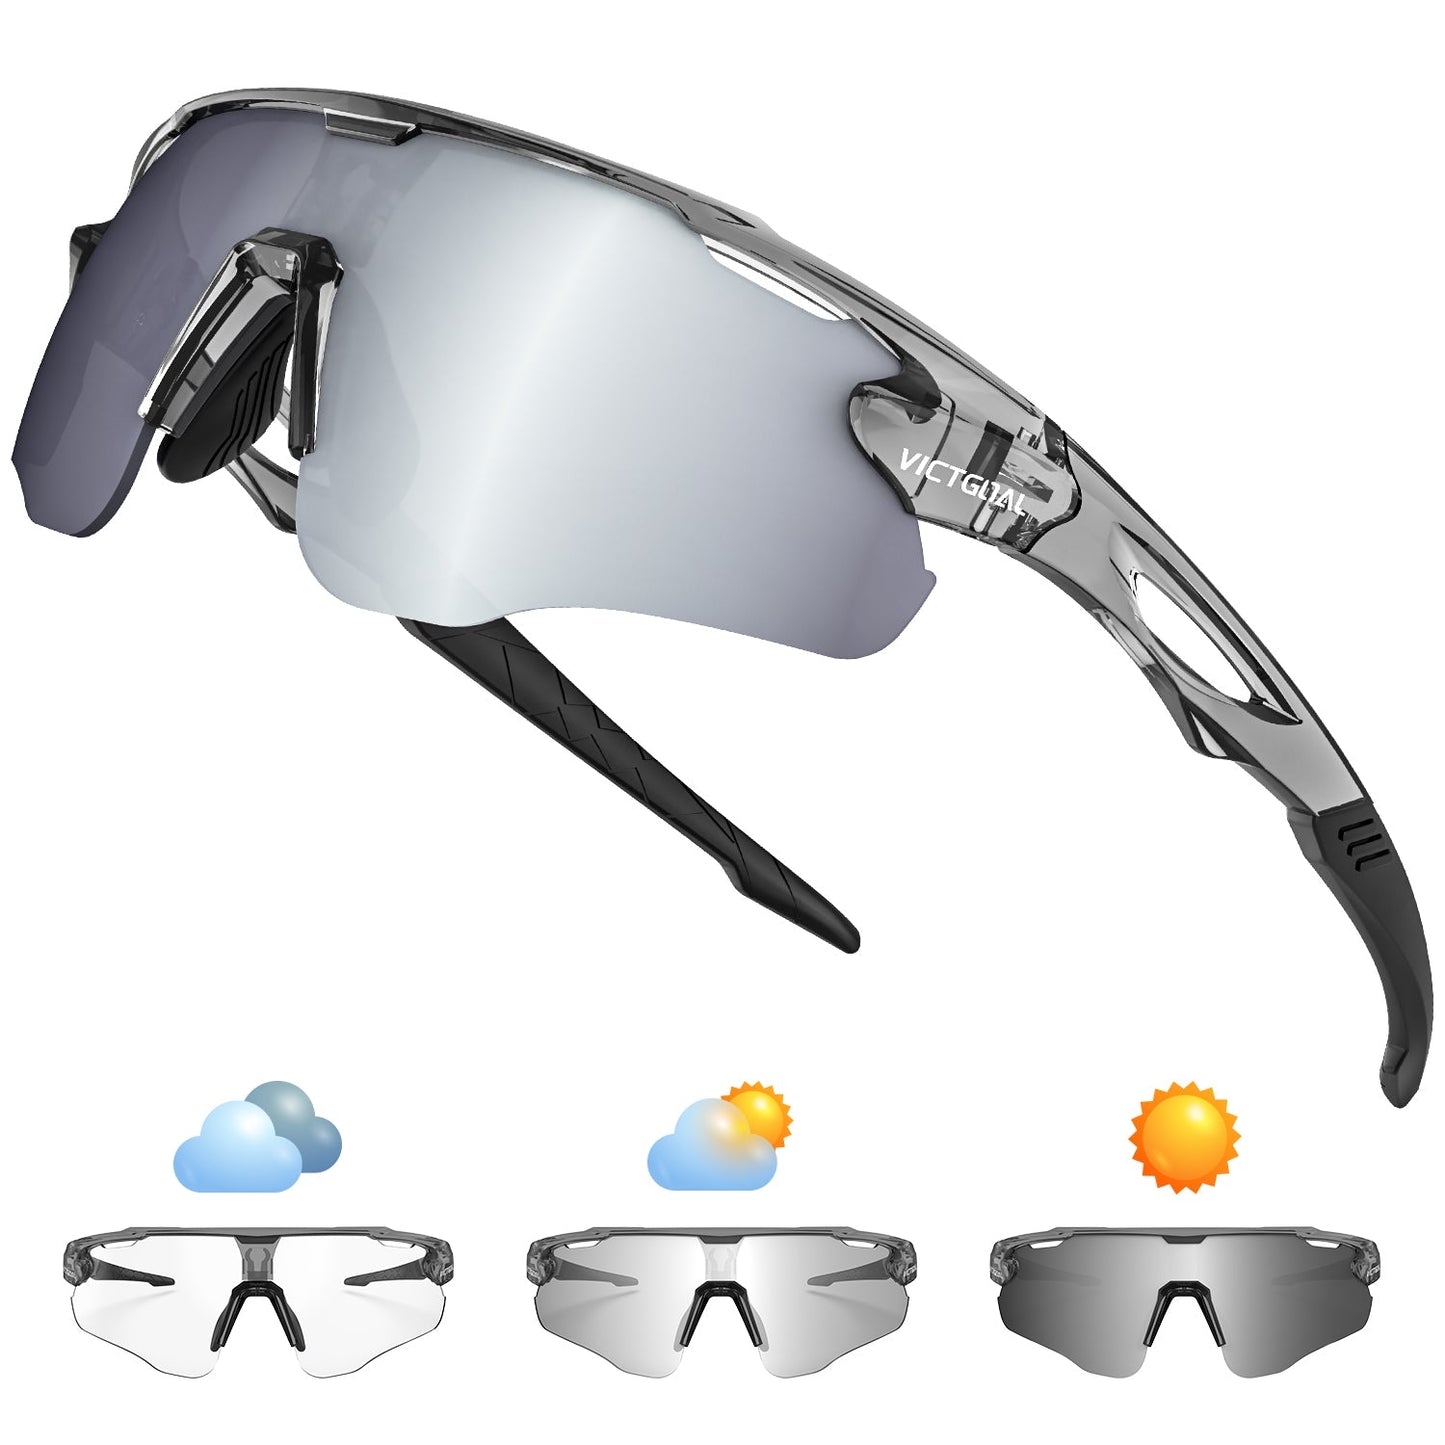 VICTGOAL Cycling Glasses Photochromic Sunglasses for Men Women TR90 Frame Glasses with UV Protection MTB Glasses for Cycling VICTGOAL